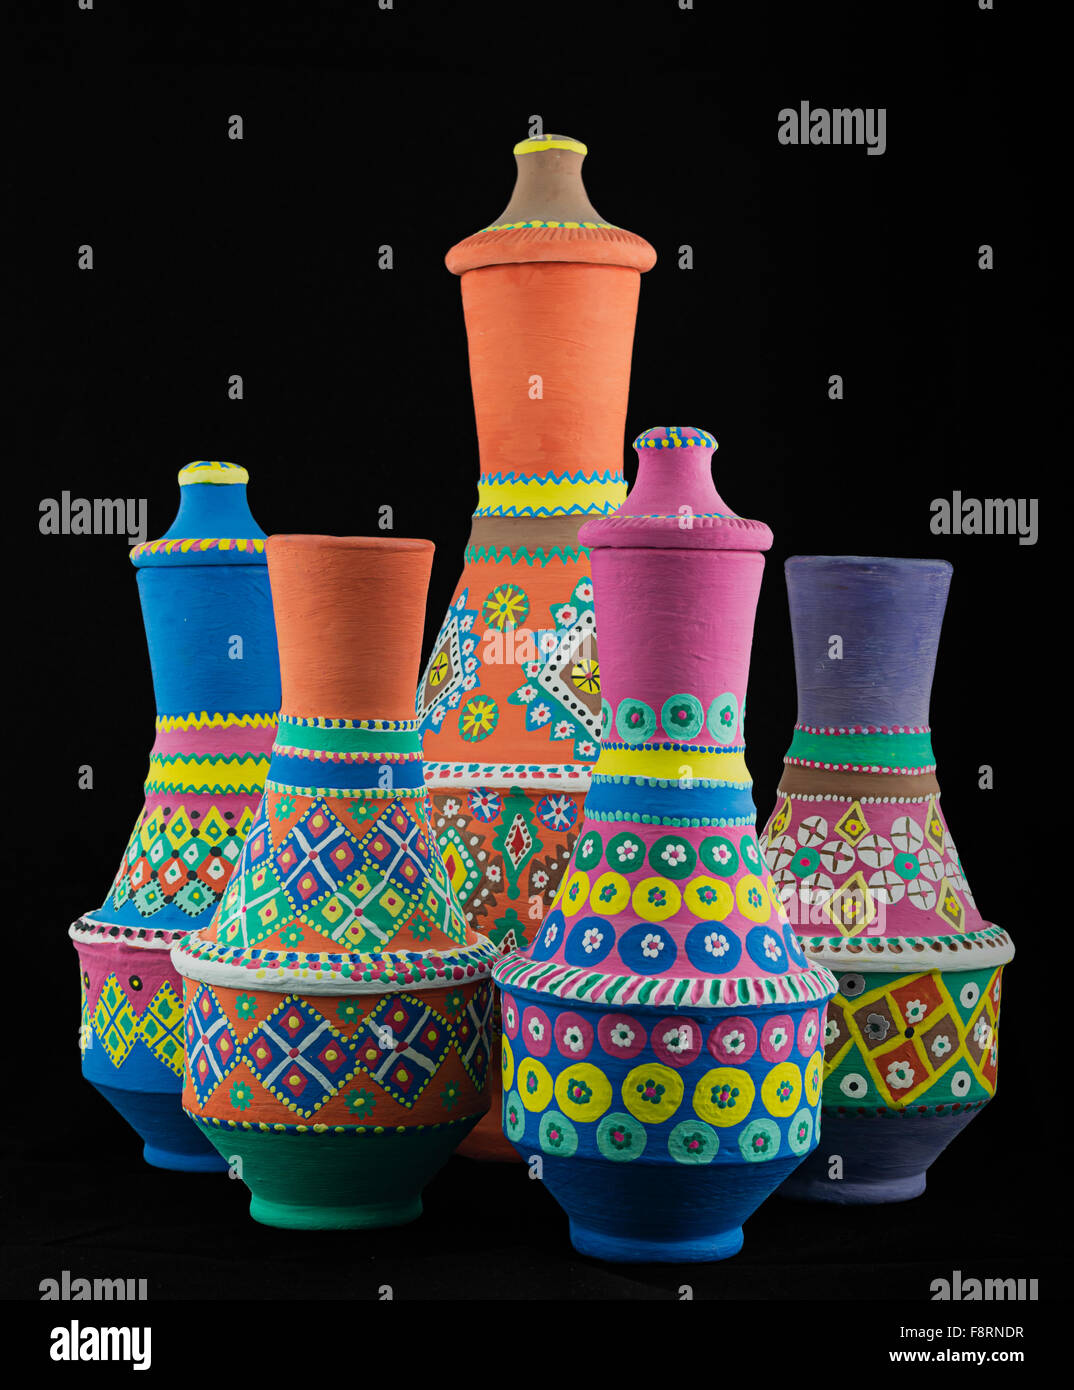 Vasijas de cerámica pintada de Egipto Fotografía de stock - Alamy